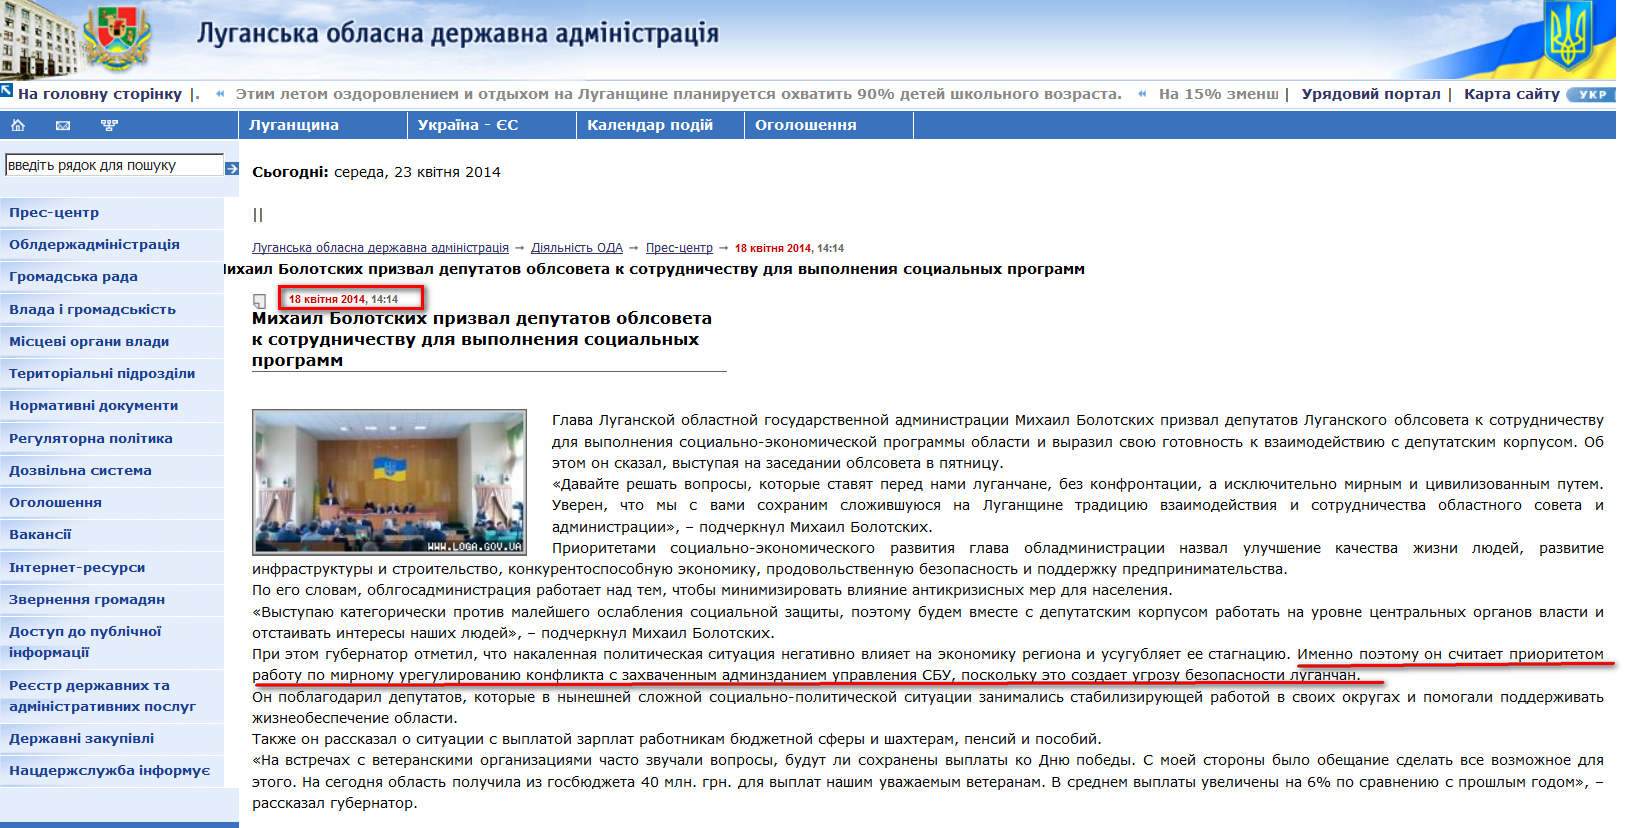 http://www.loga.gov.ua/oda/press/news/2014/04/18/news_67513.html